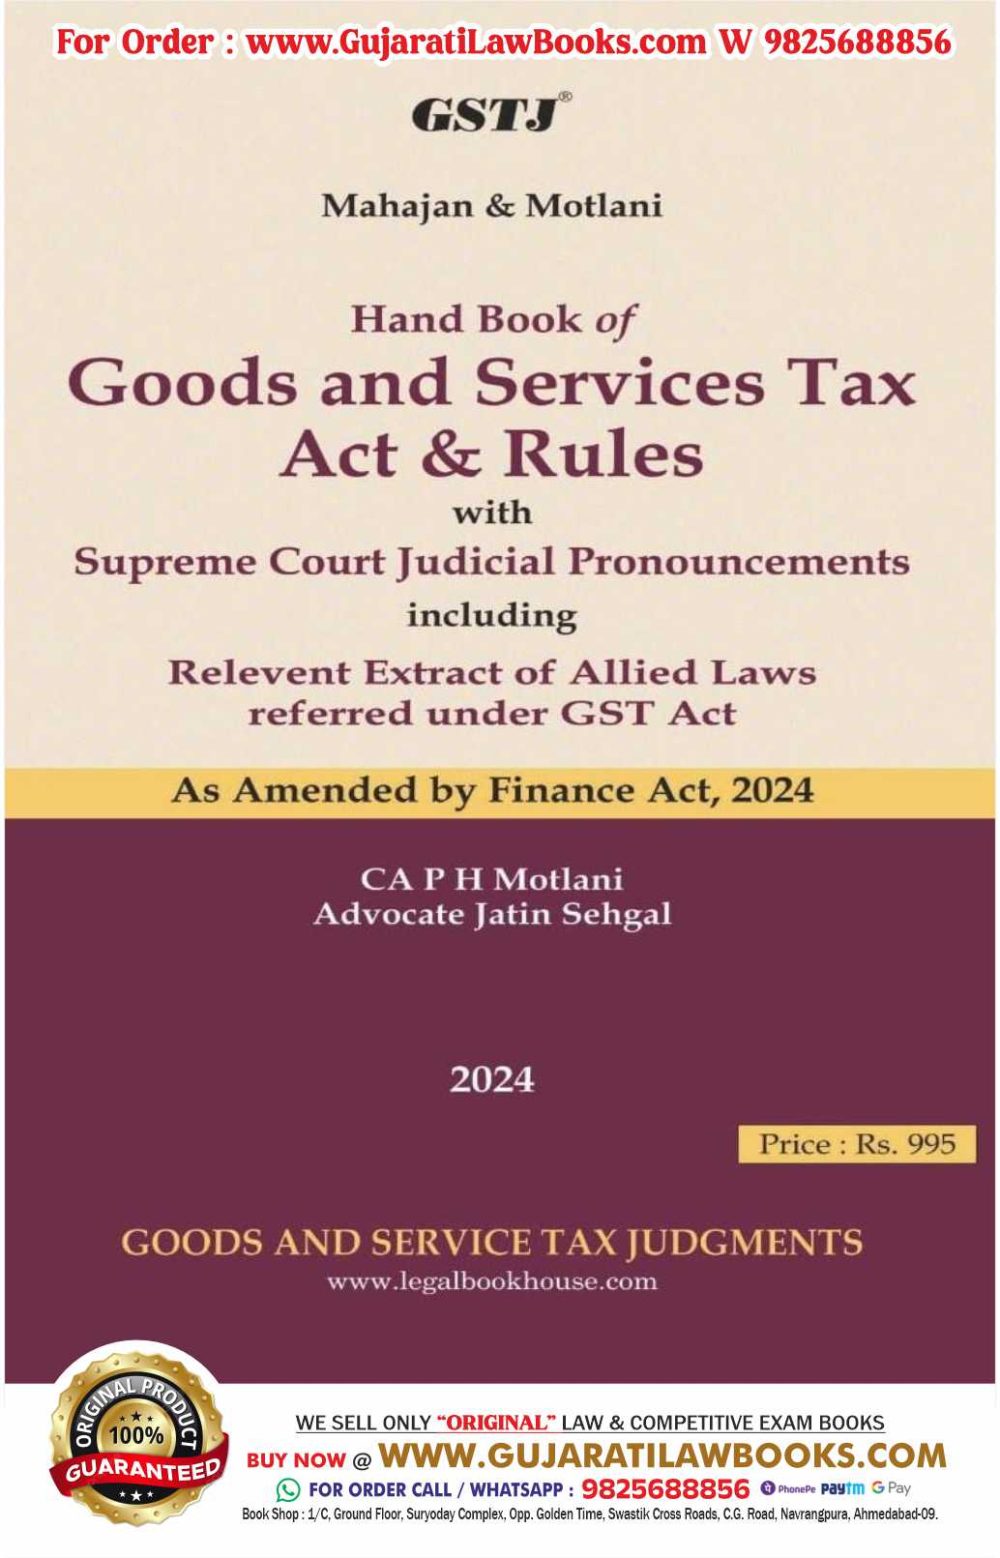 Handbook of GST Goods and Service Tax Act & Rules by Mahajan & Motlani - Latest March 2024 Edition